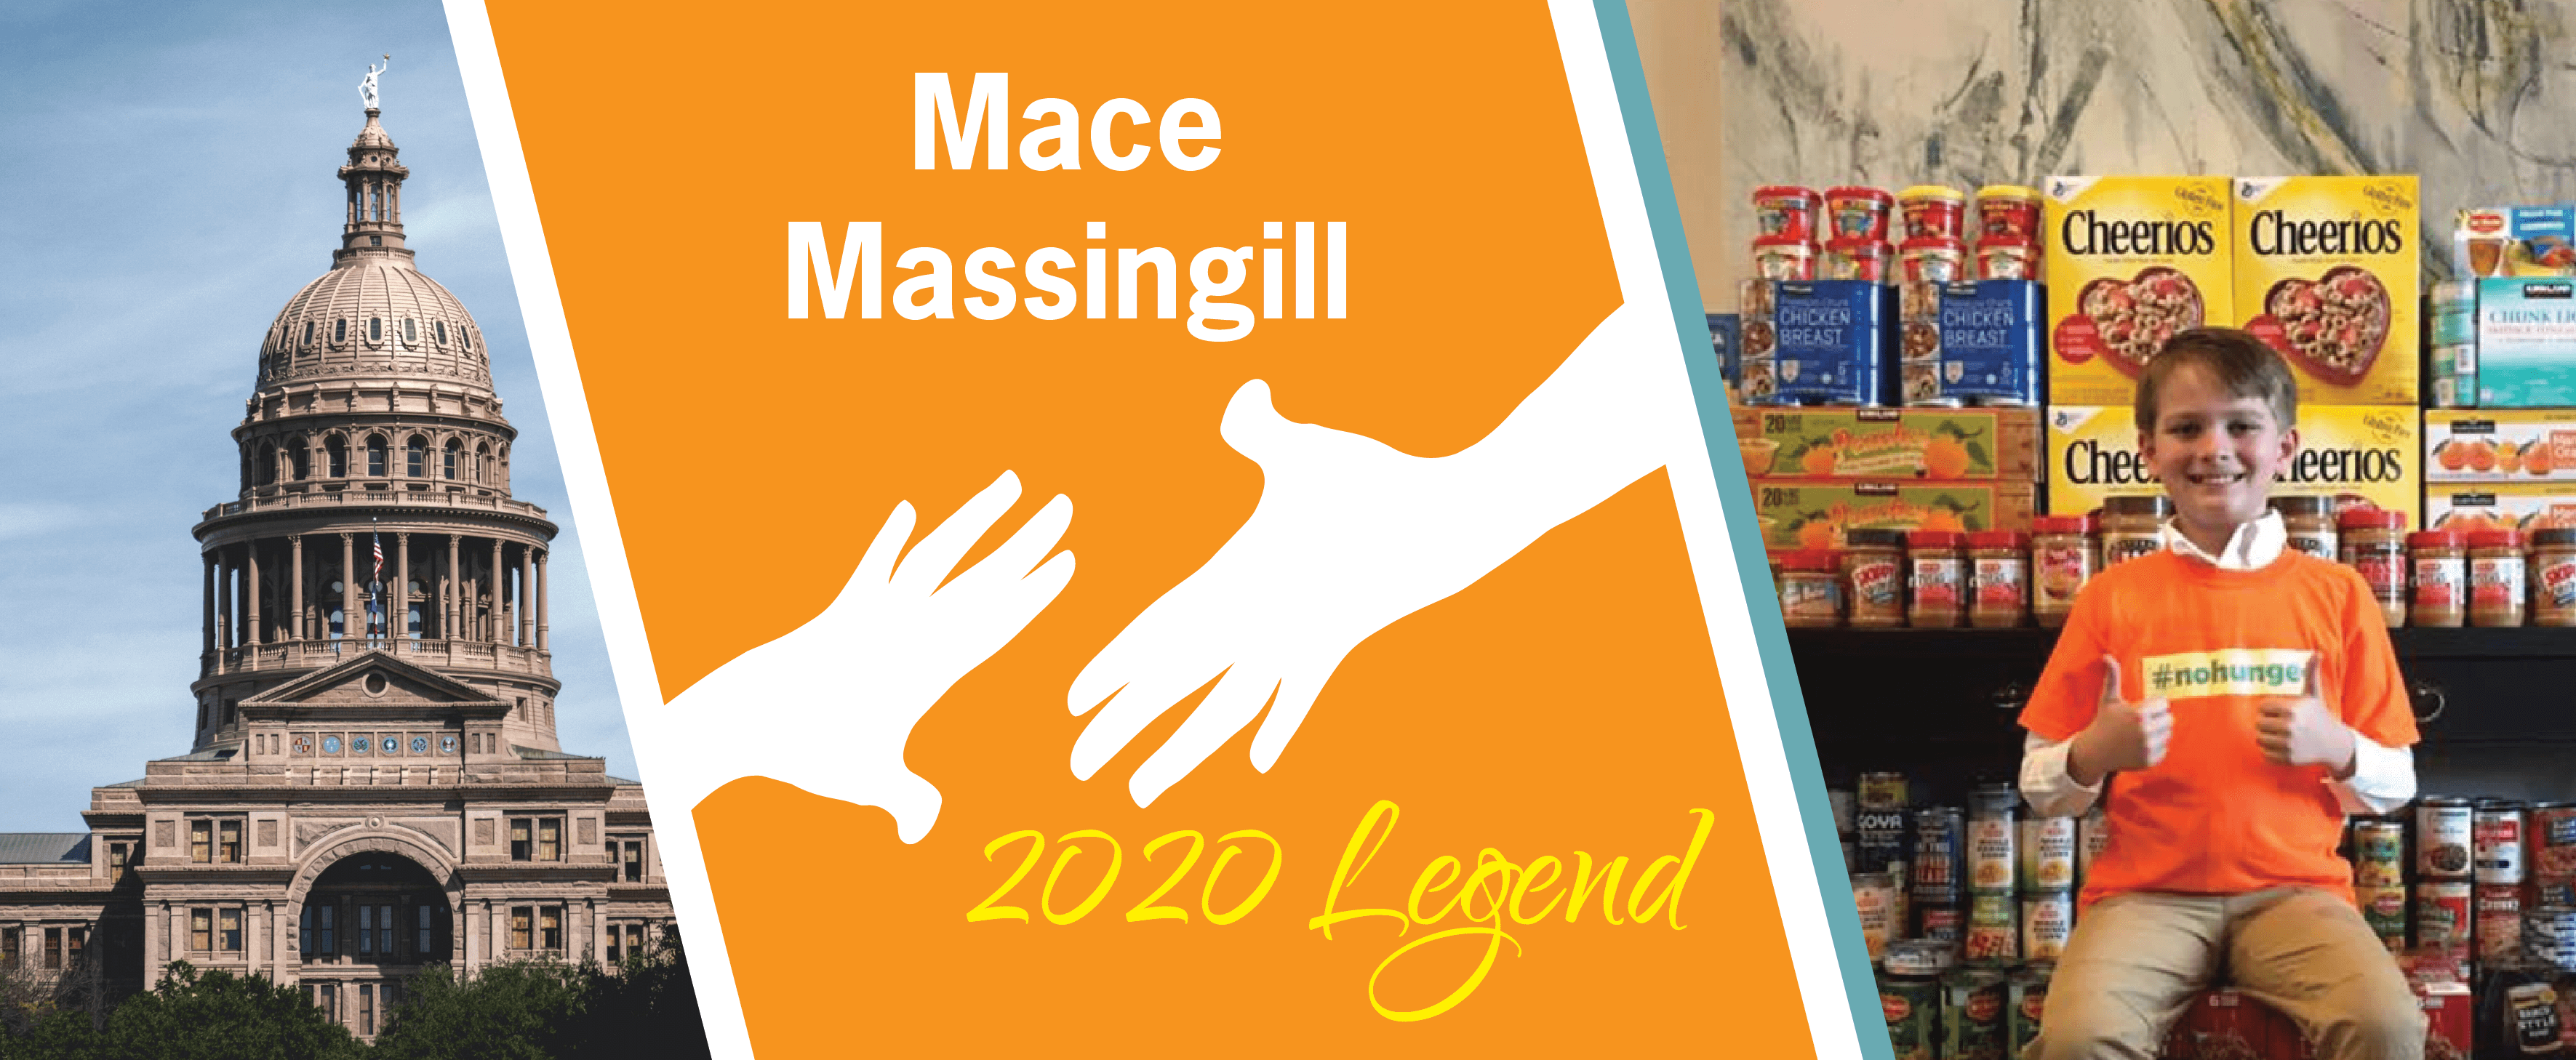 Mace Massingill Legend